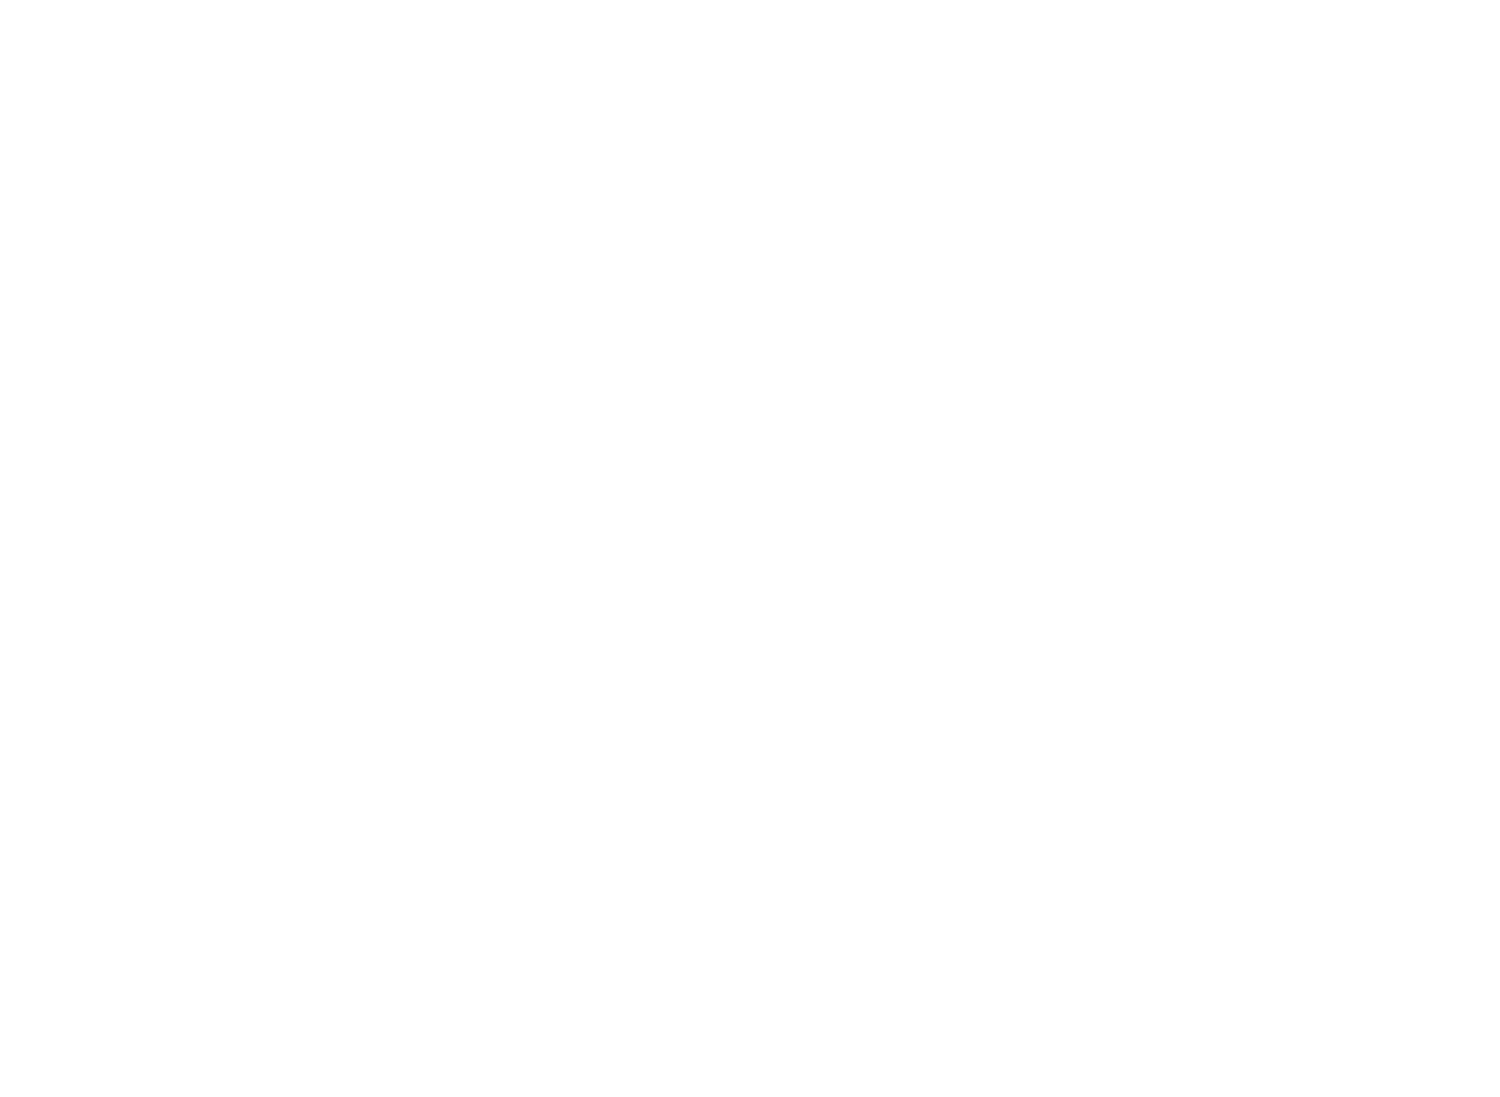 BUS Centennial 